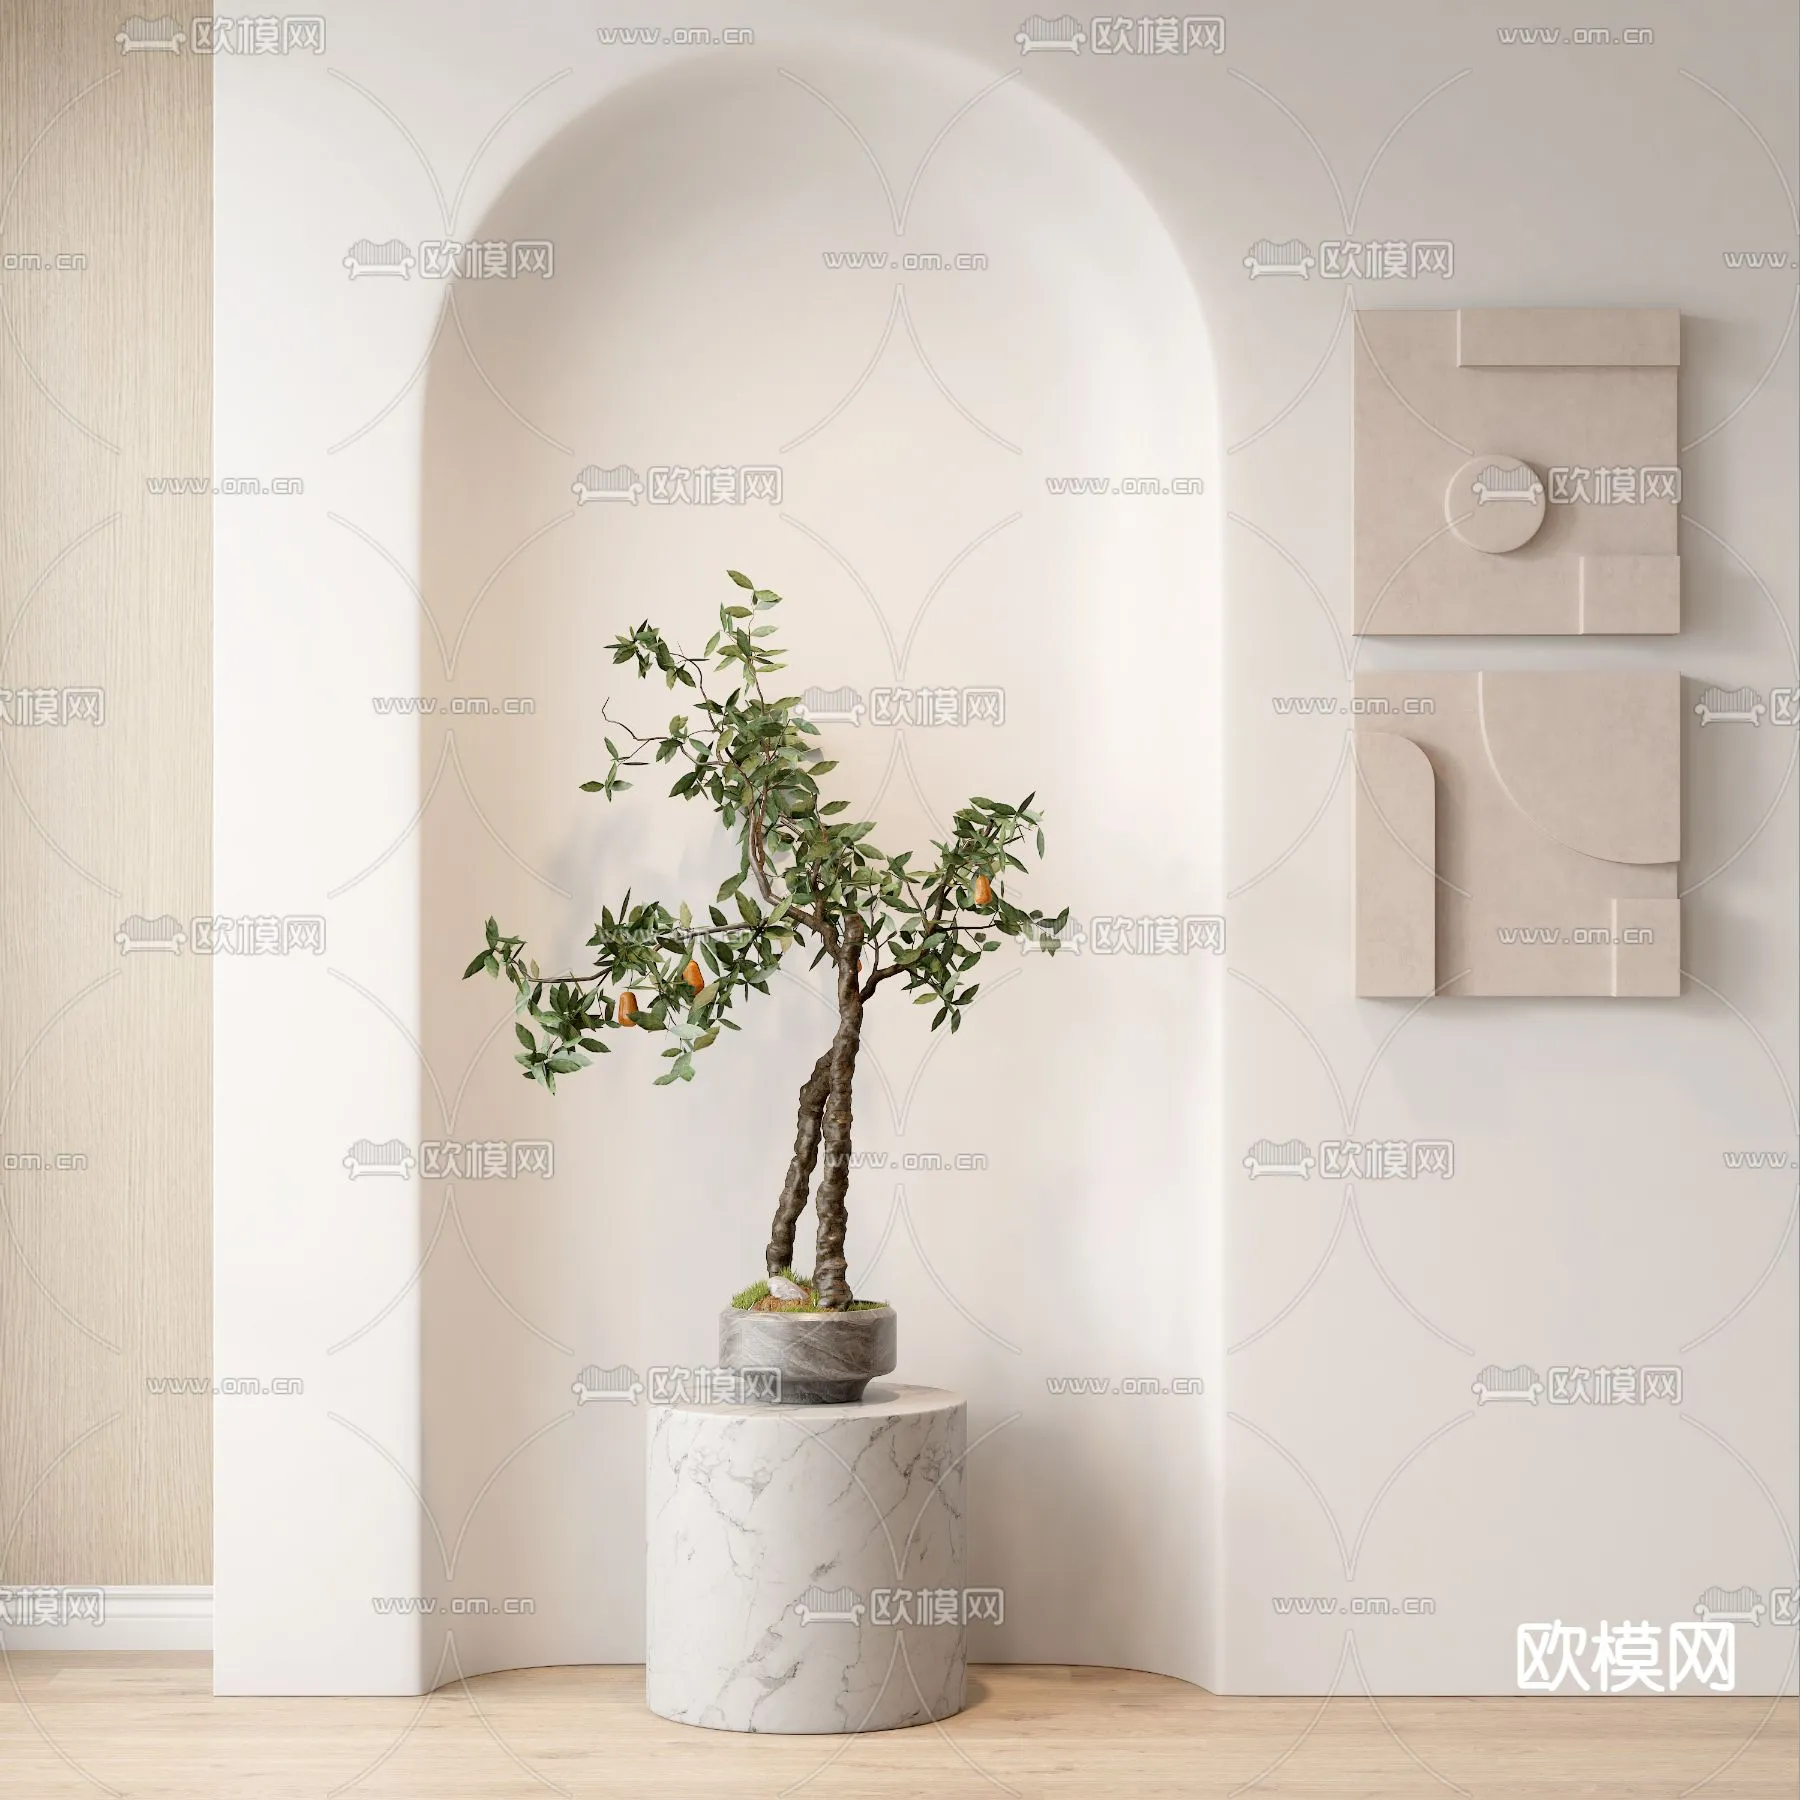 Plant – VRAY / CORONA – 3D MODEL – 465